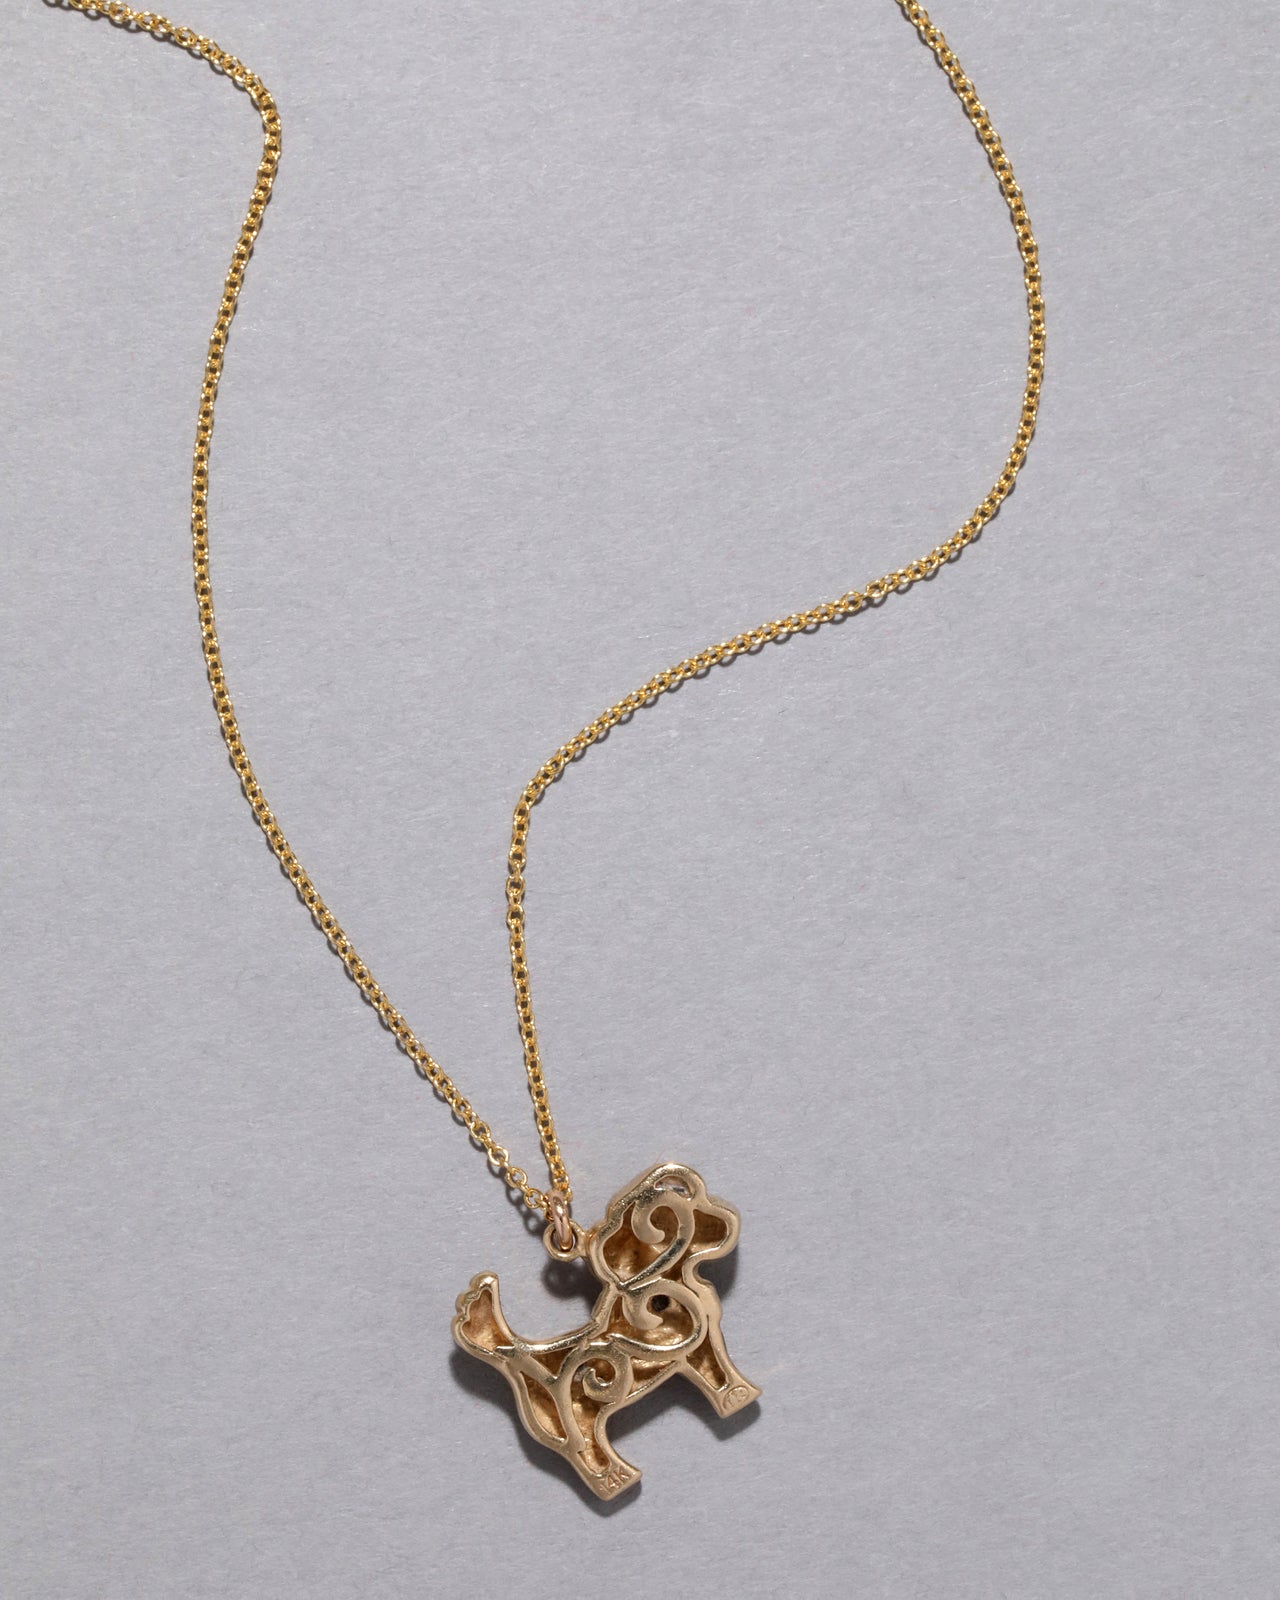 Vintage 14k Gold Dog with Diamond Collar Pendant Necklace - Photo 2